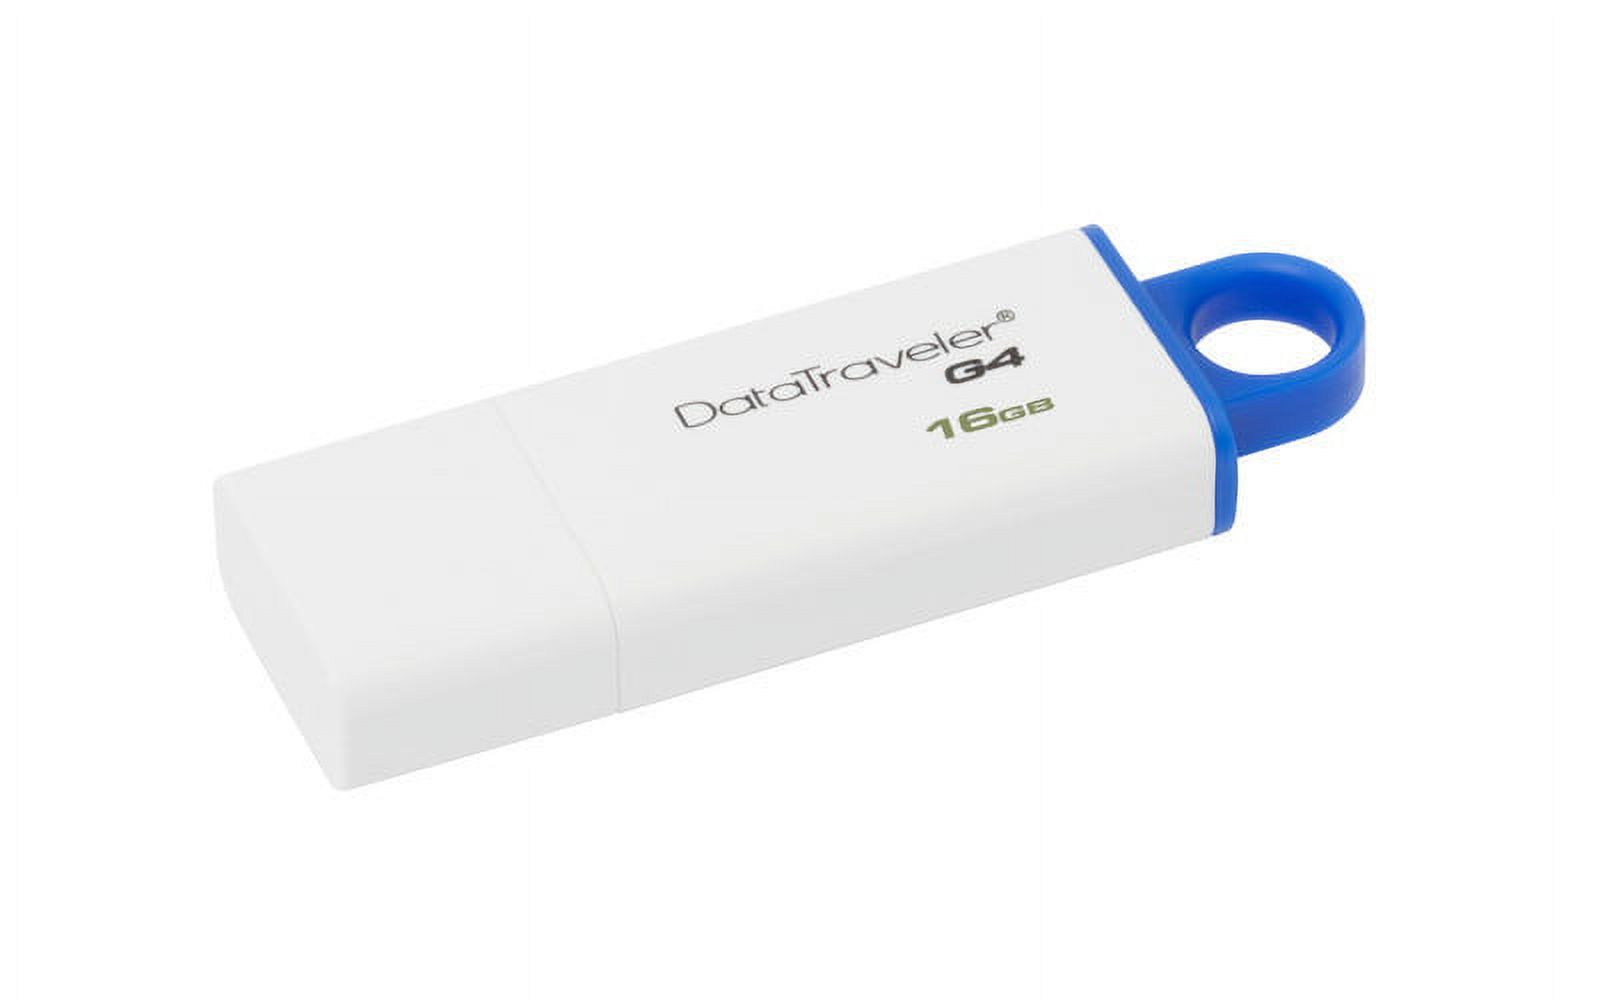 Kingston DataTraveler G4 16GB USB 3.0 Flash Drive Blue - image 2 of 5